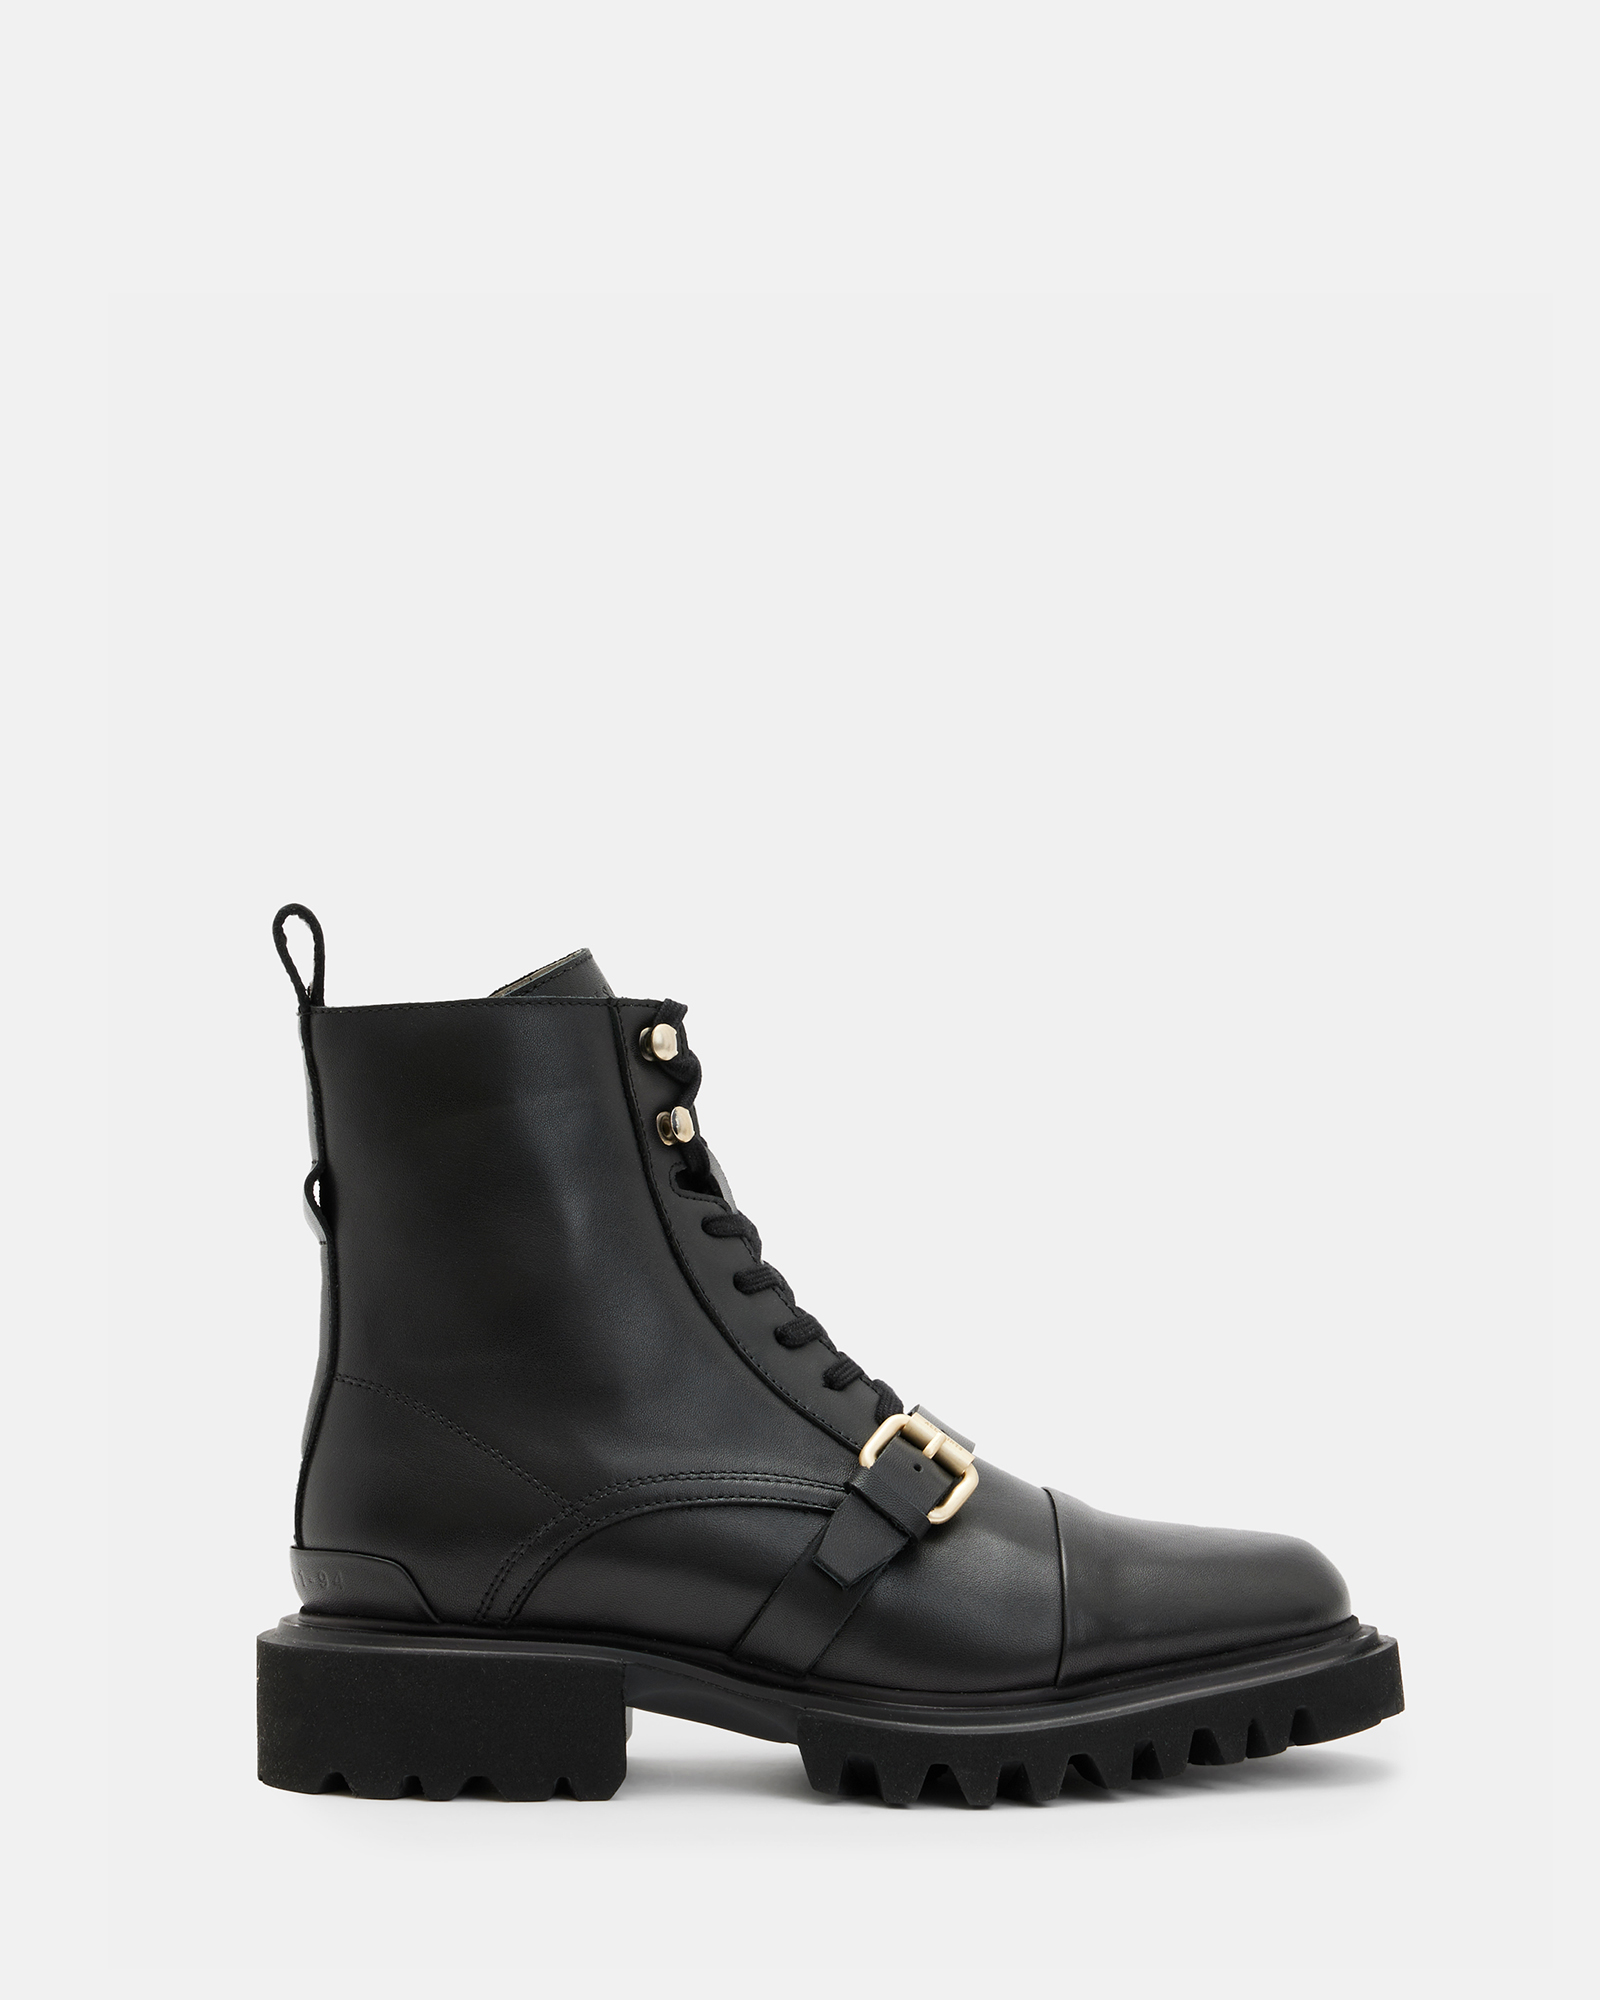 AllSaints Tori Leather Boots,, BLACK/WARM BRASS